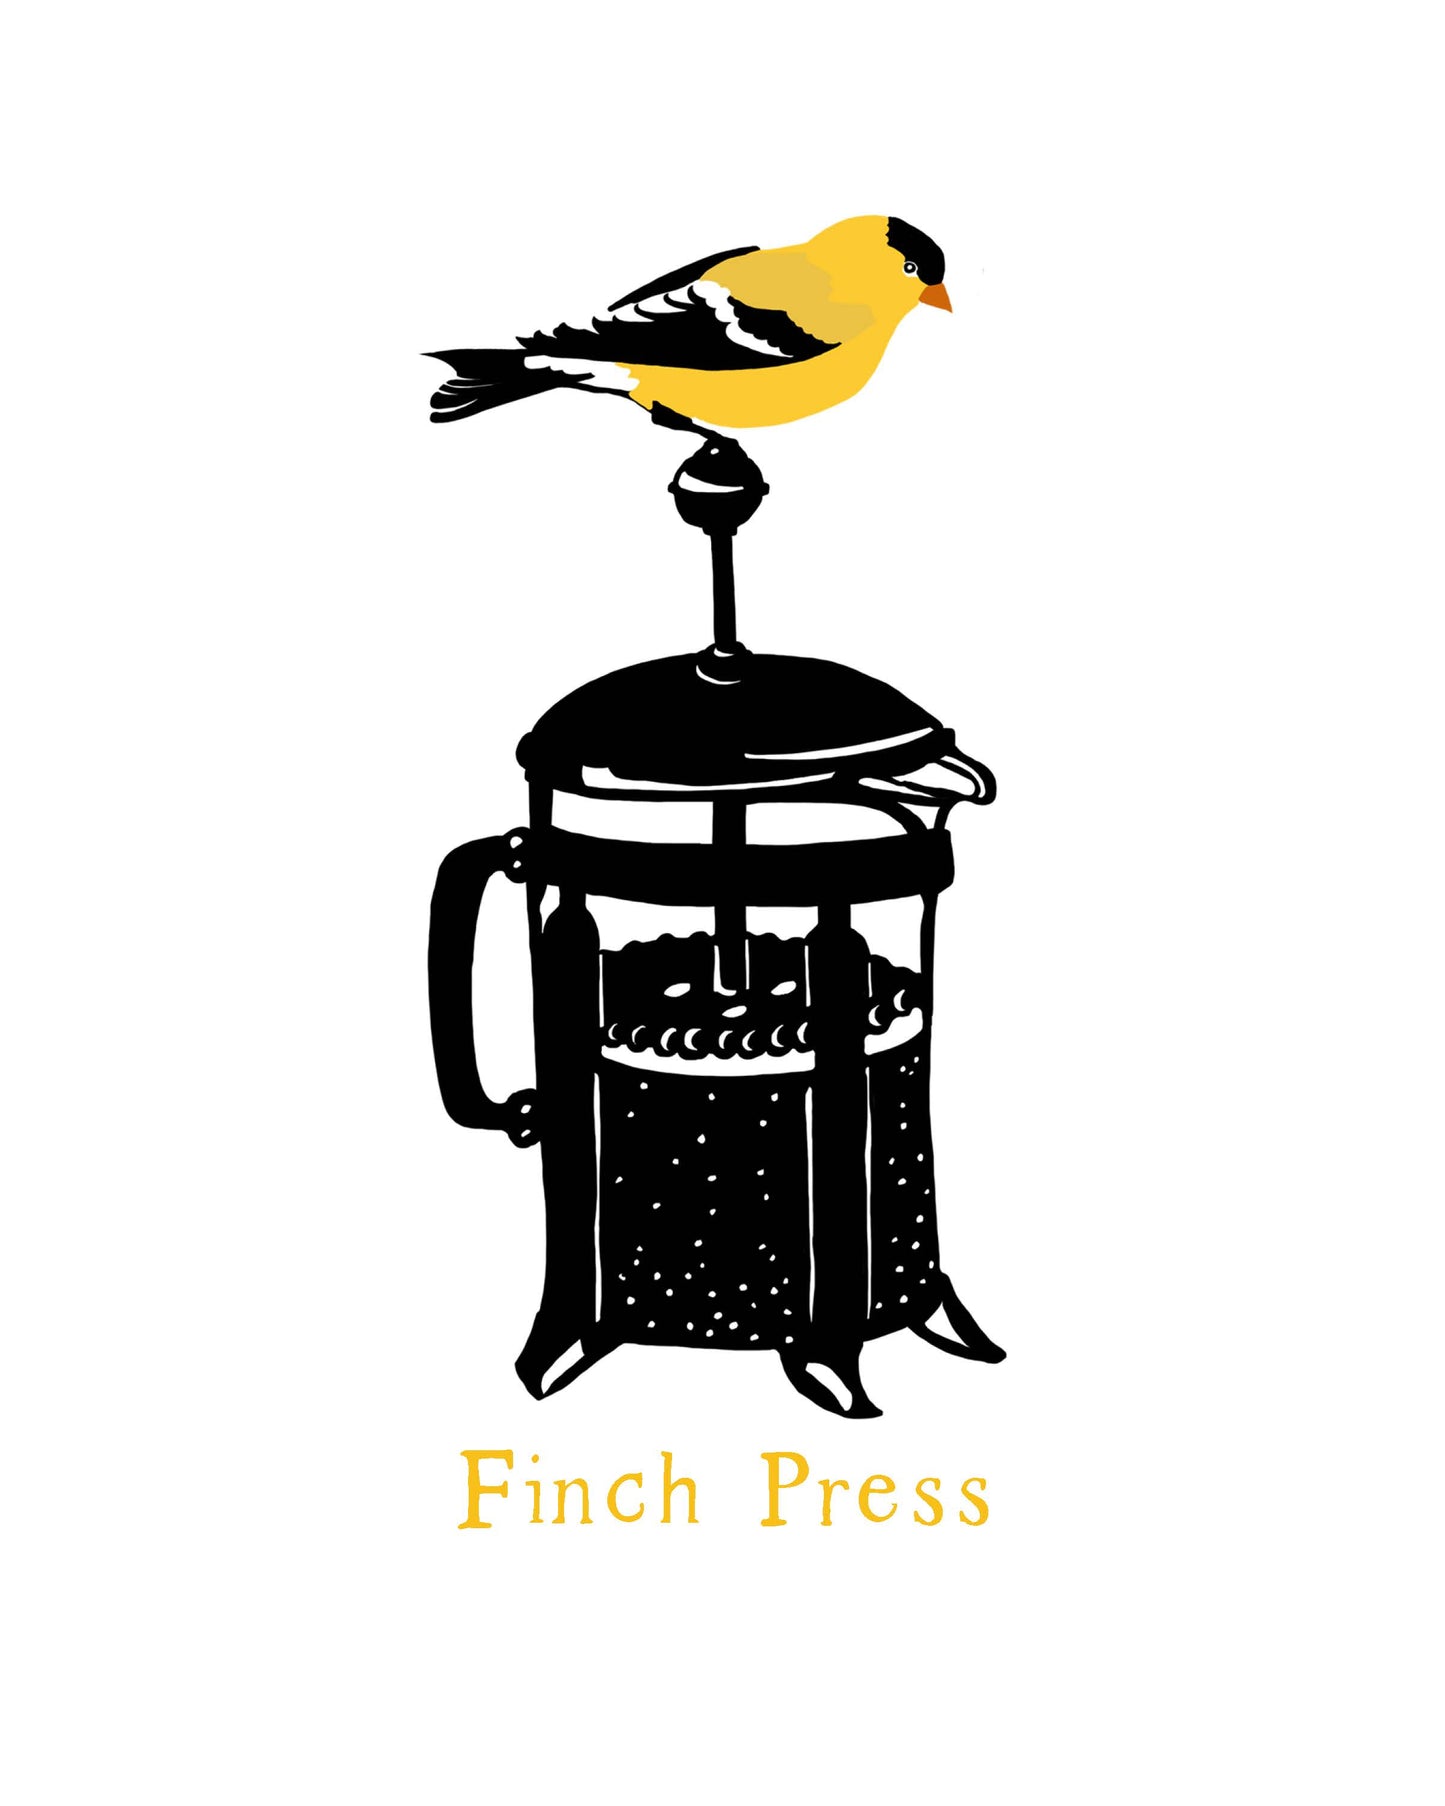 Finch Press